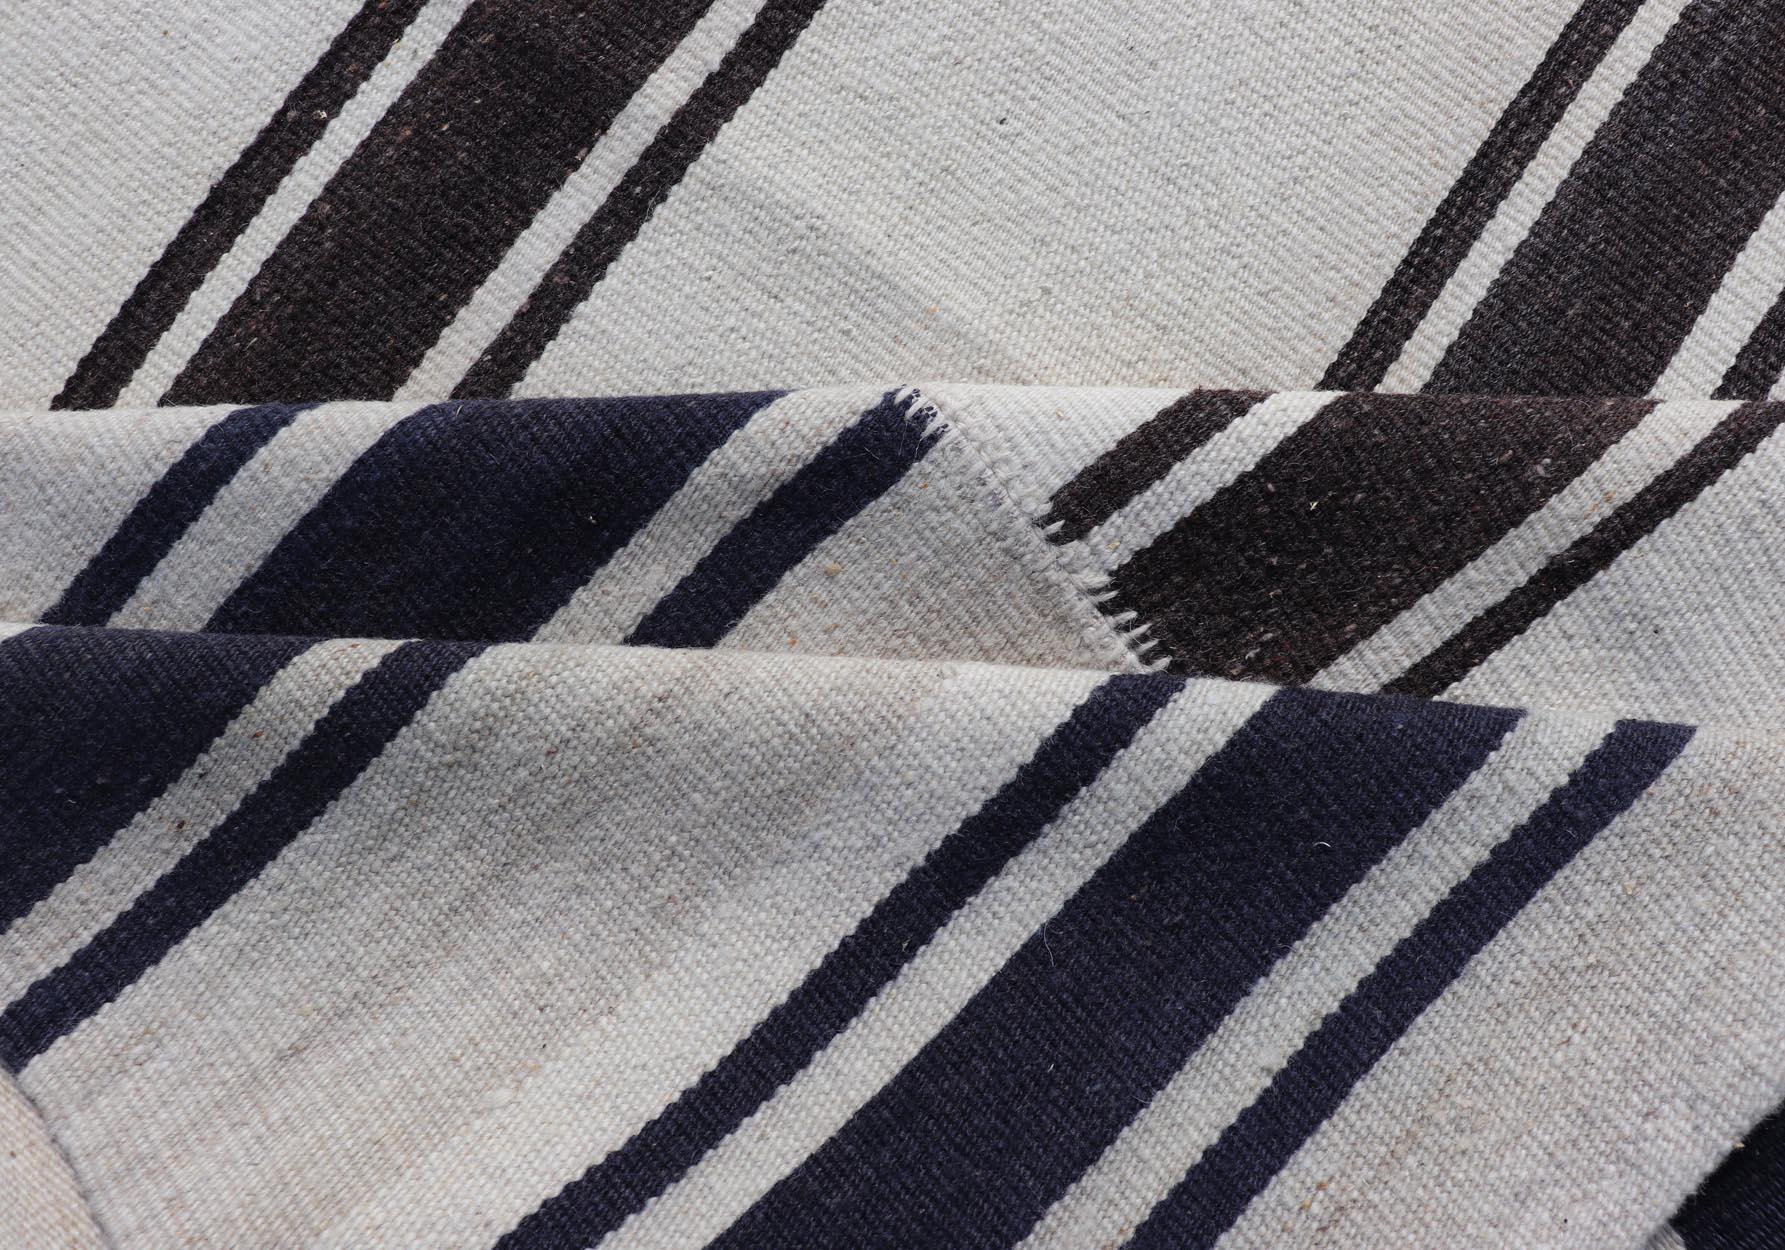  Paneled Vintage Turkish Stripe Kilim in Off White, Black,  Brown & Dark Blue  For Sale 1